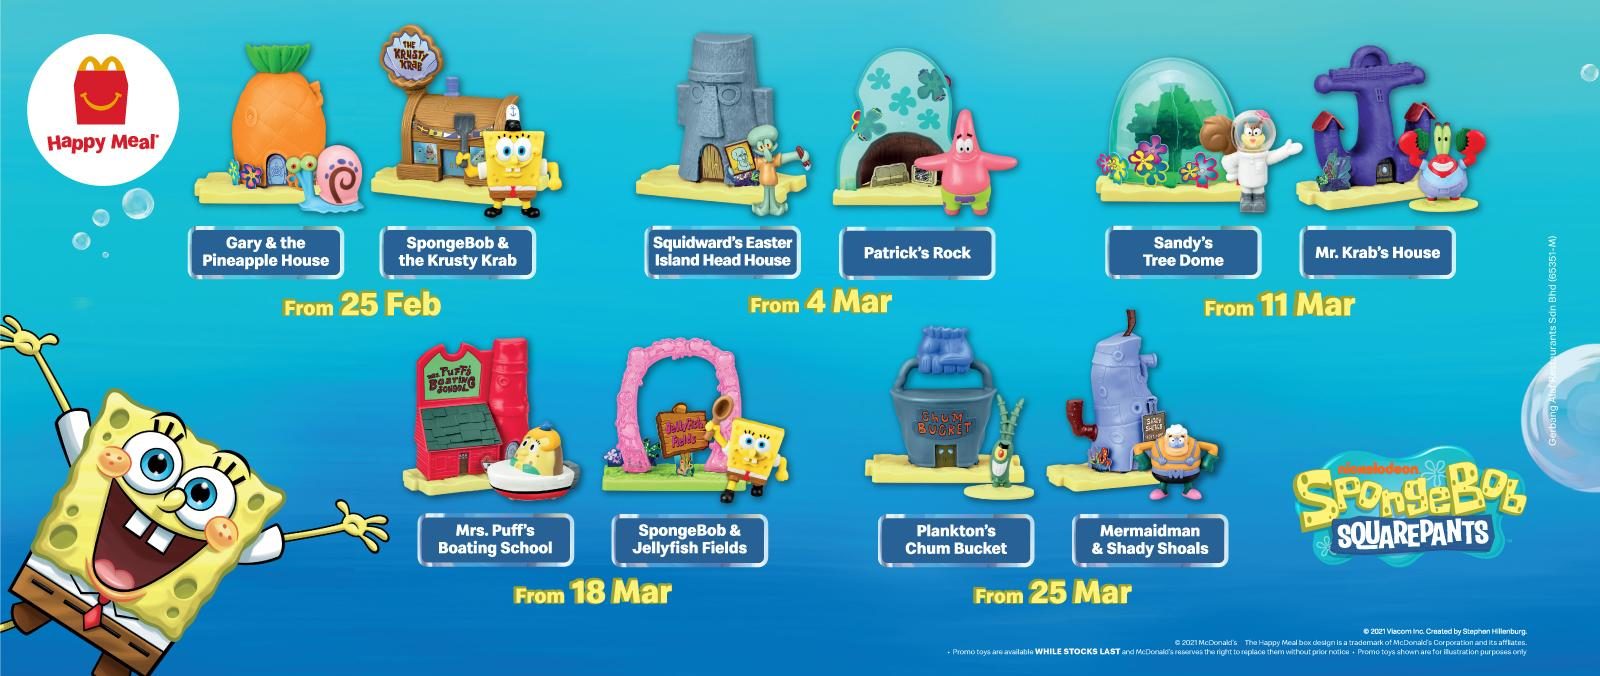 Squidward 2021 Mcdonalds Happy Meal Toy Spongebob Squarepants 